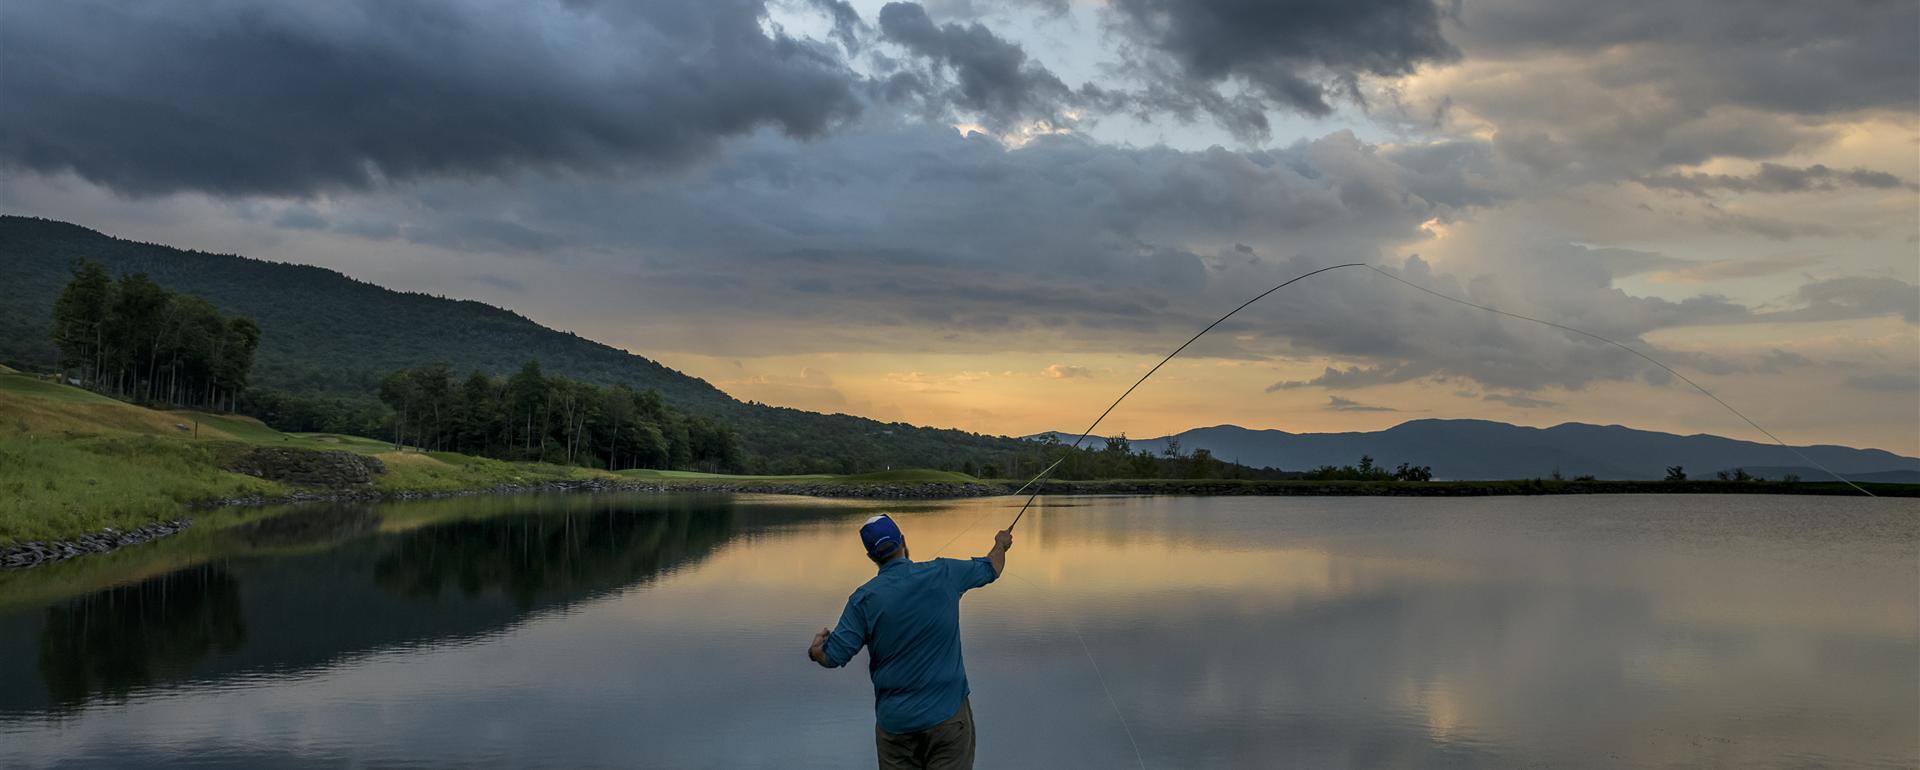 Fishing in Stowe, VT Spruce Peak Best Fishing in Vermont